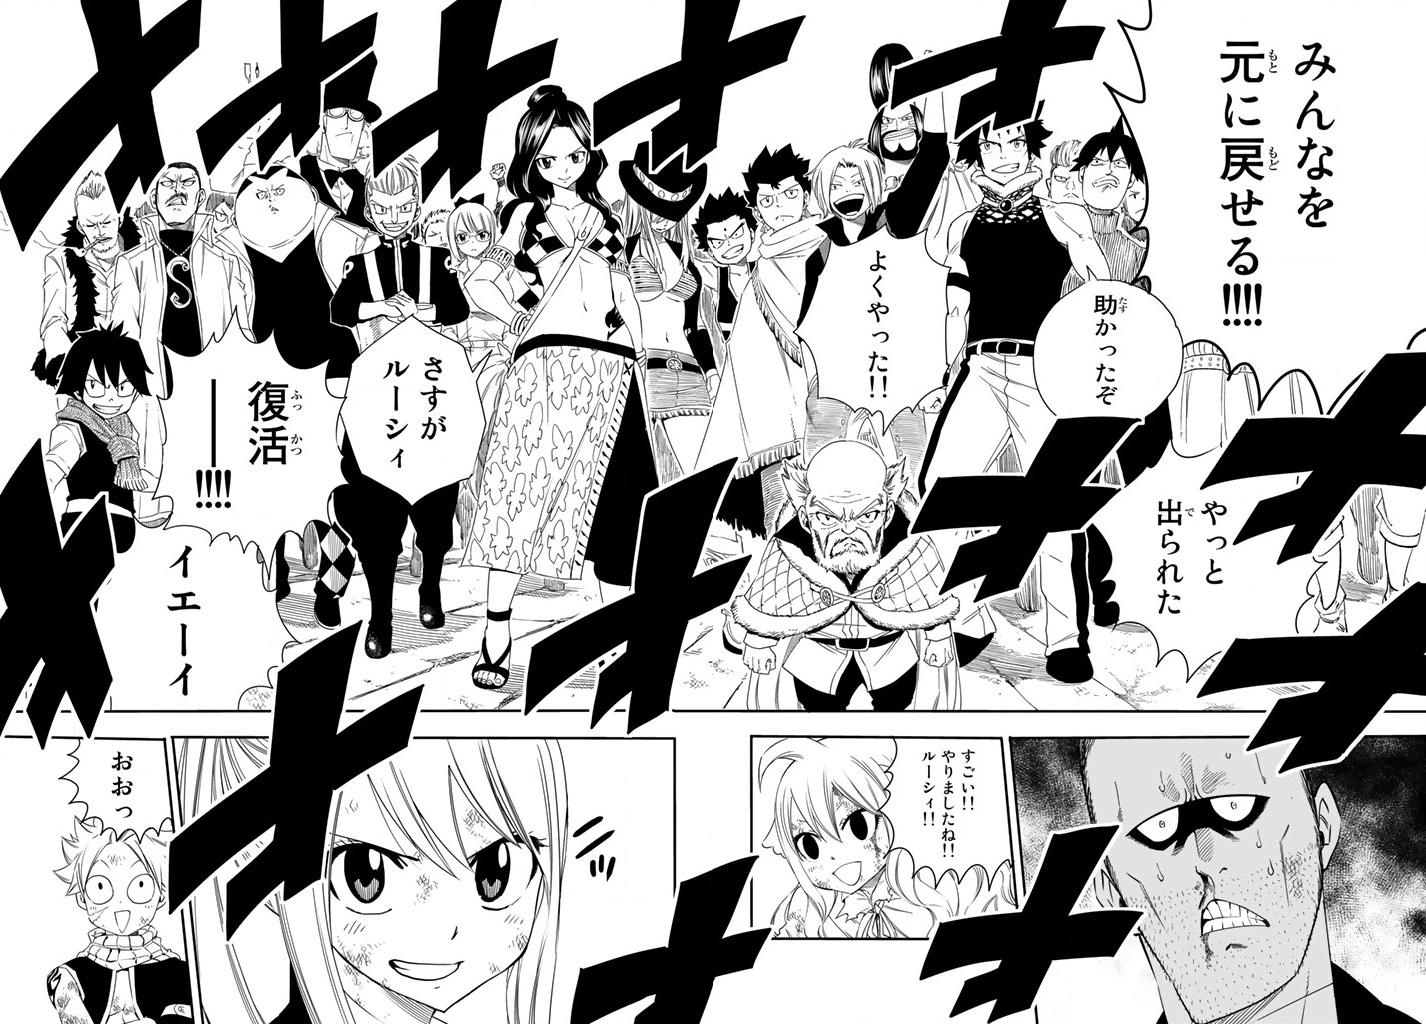 Fairy Tail 479 Manga Preview Spoilers Daily Anime Art